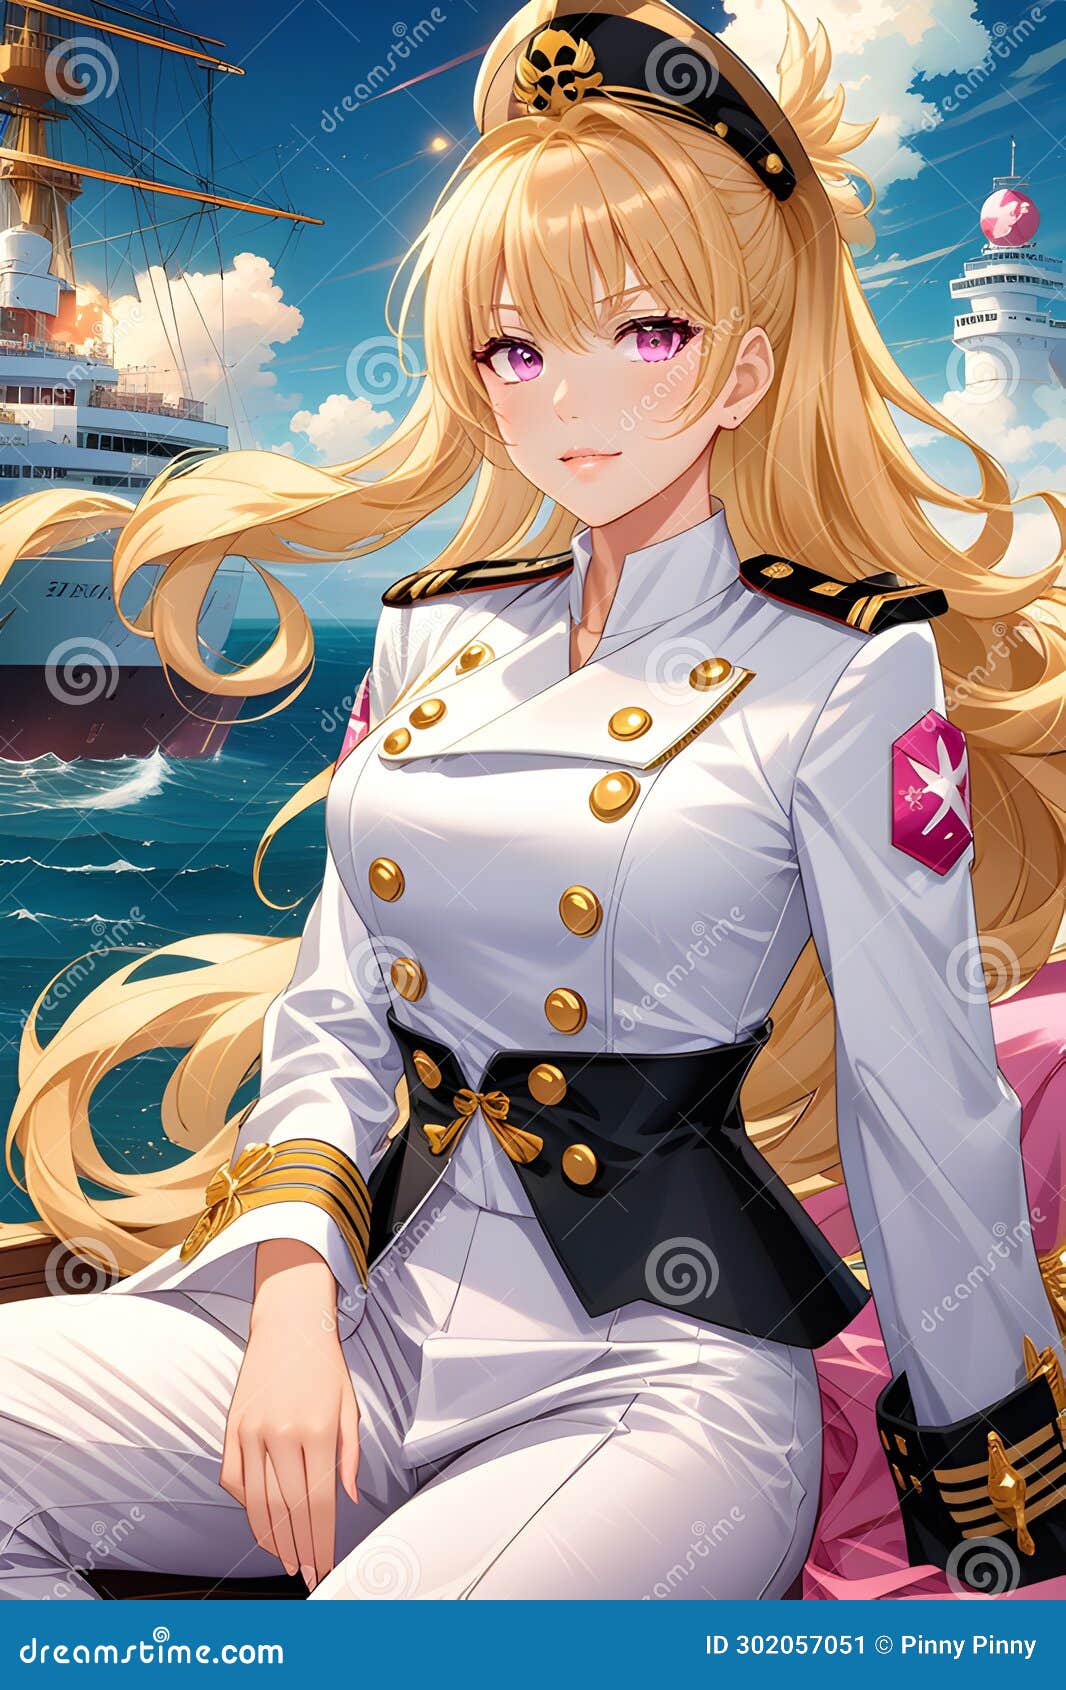 Ahoy! Here's a drawing of Marine from Hololive. #lemehdo #anime #manga  #animegirl #animegirls #marine #houshoumarine #hololive #pirate ... |  Instagram